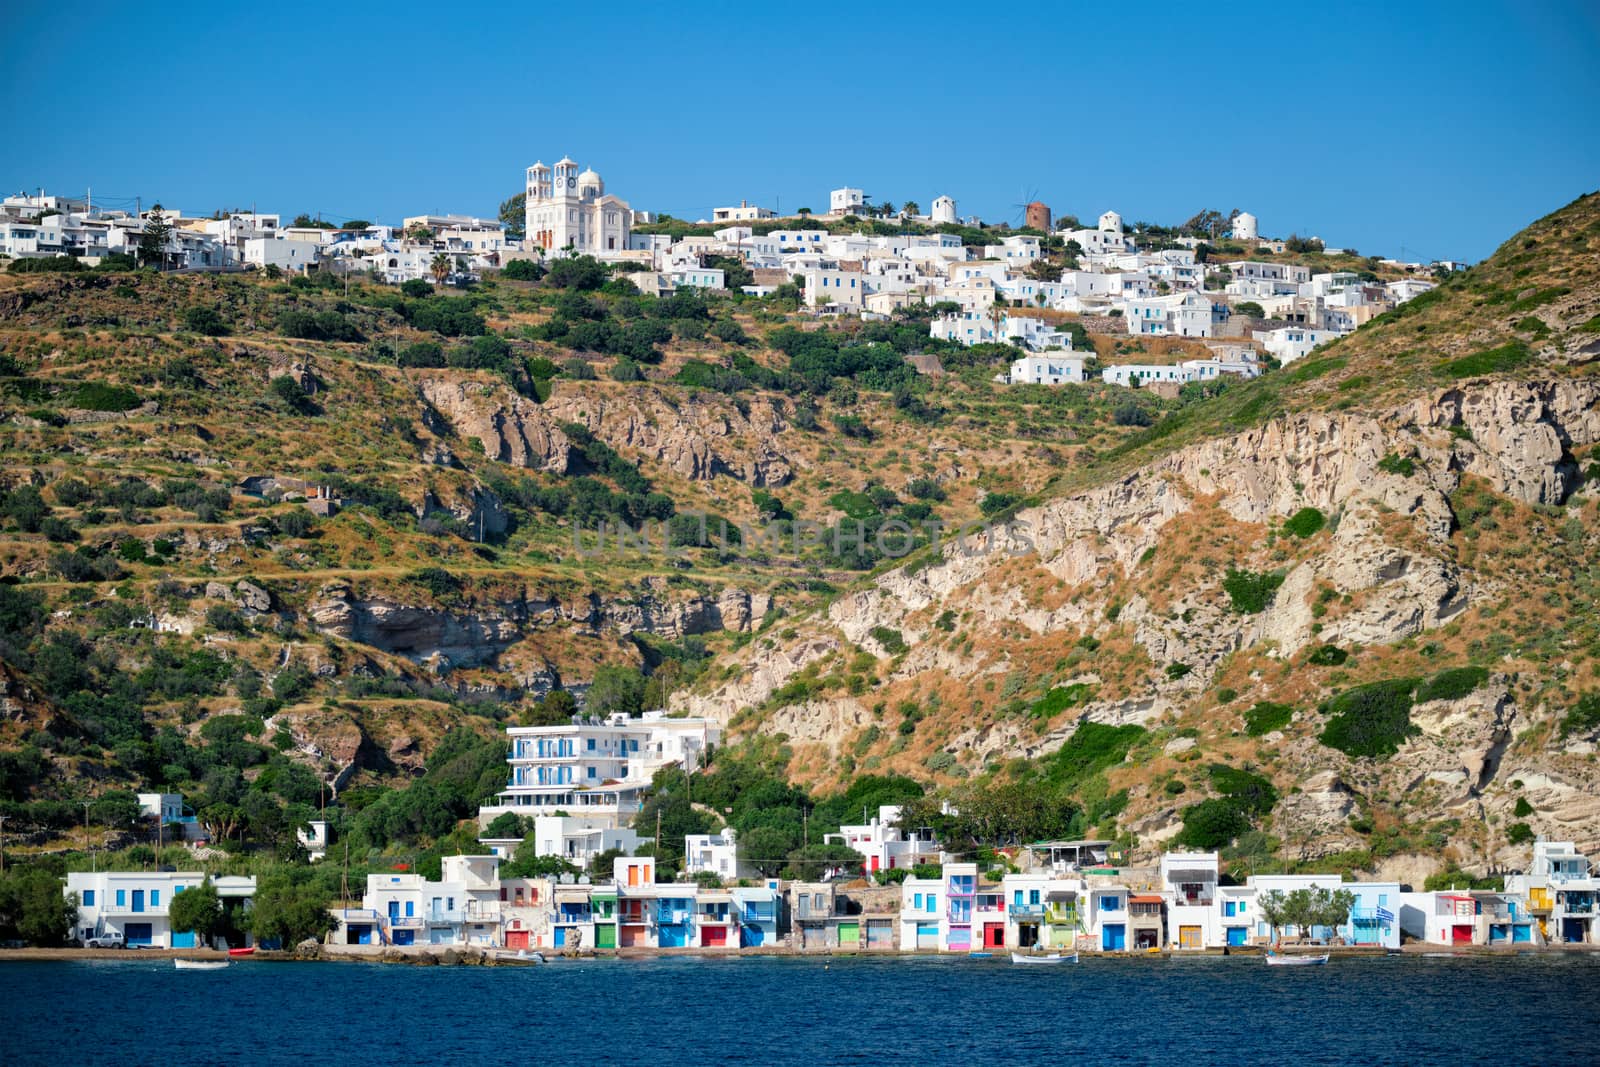 Klima and Plaka villages on Milos island, Greece by dimol